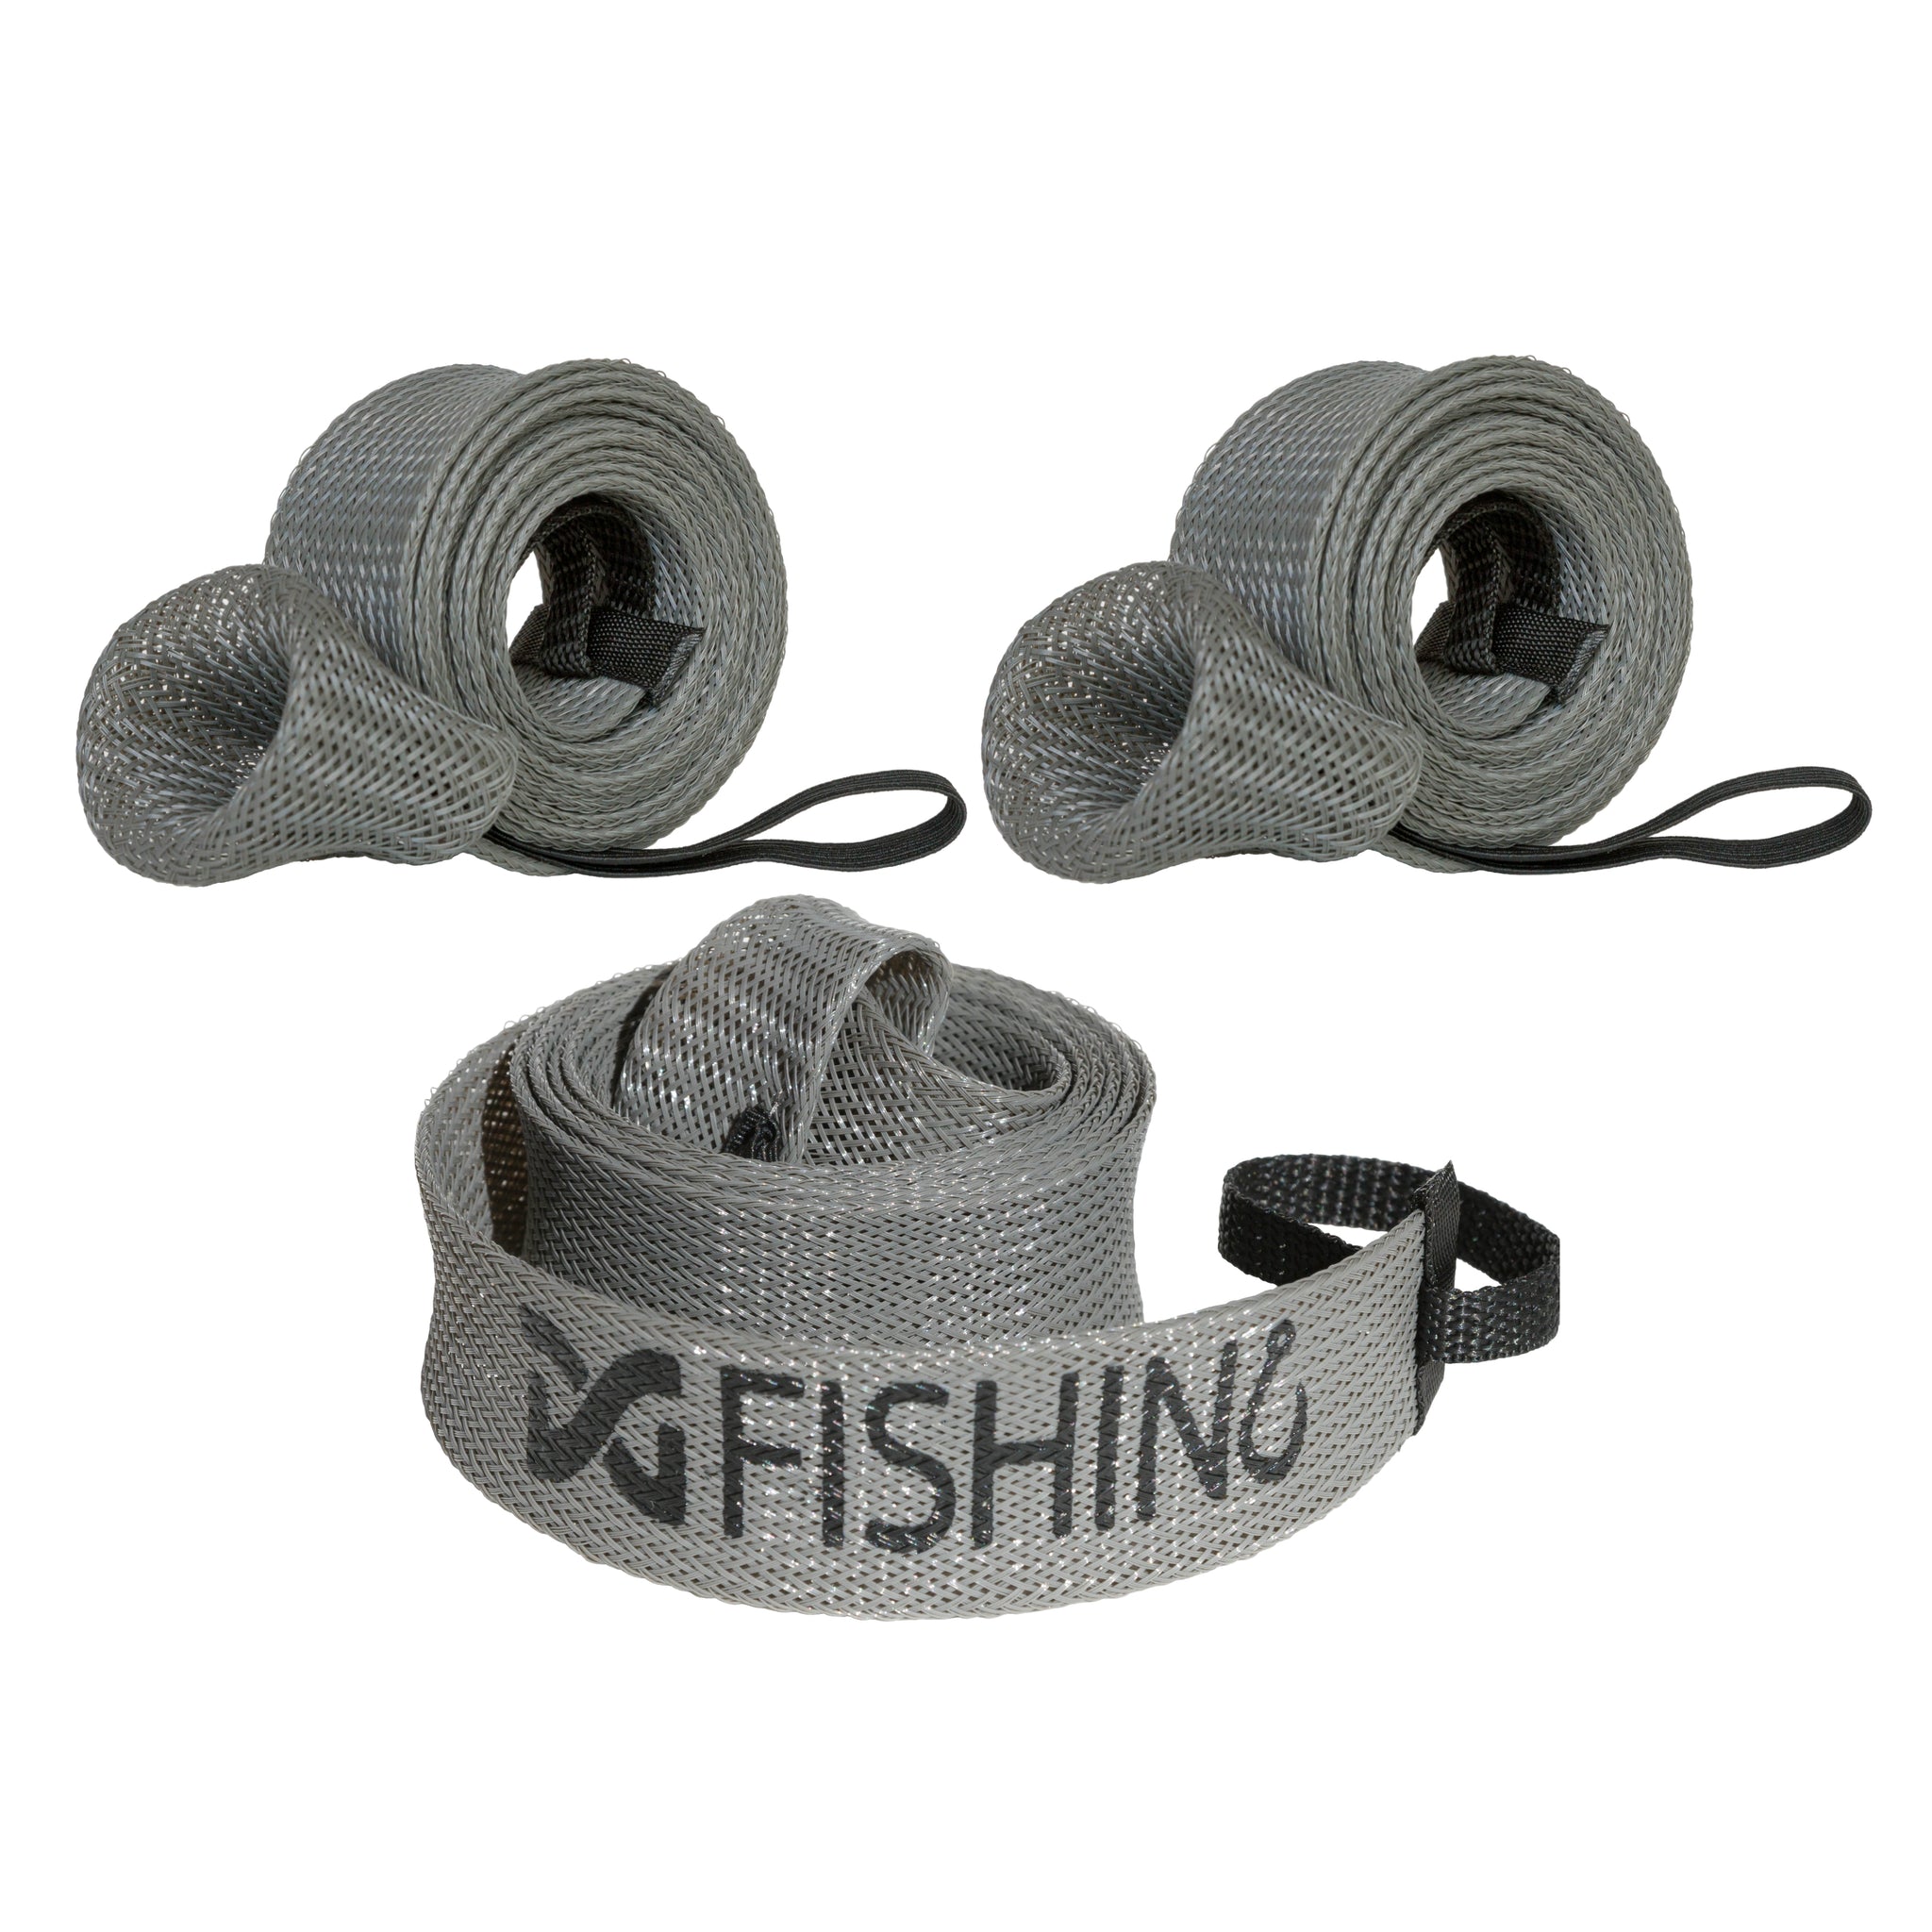 Buy 3 get 1 Free 67 Fishing Rod Sleeve Cover Braided Mesh Rod